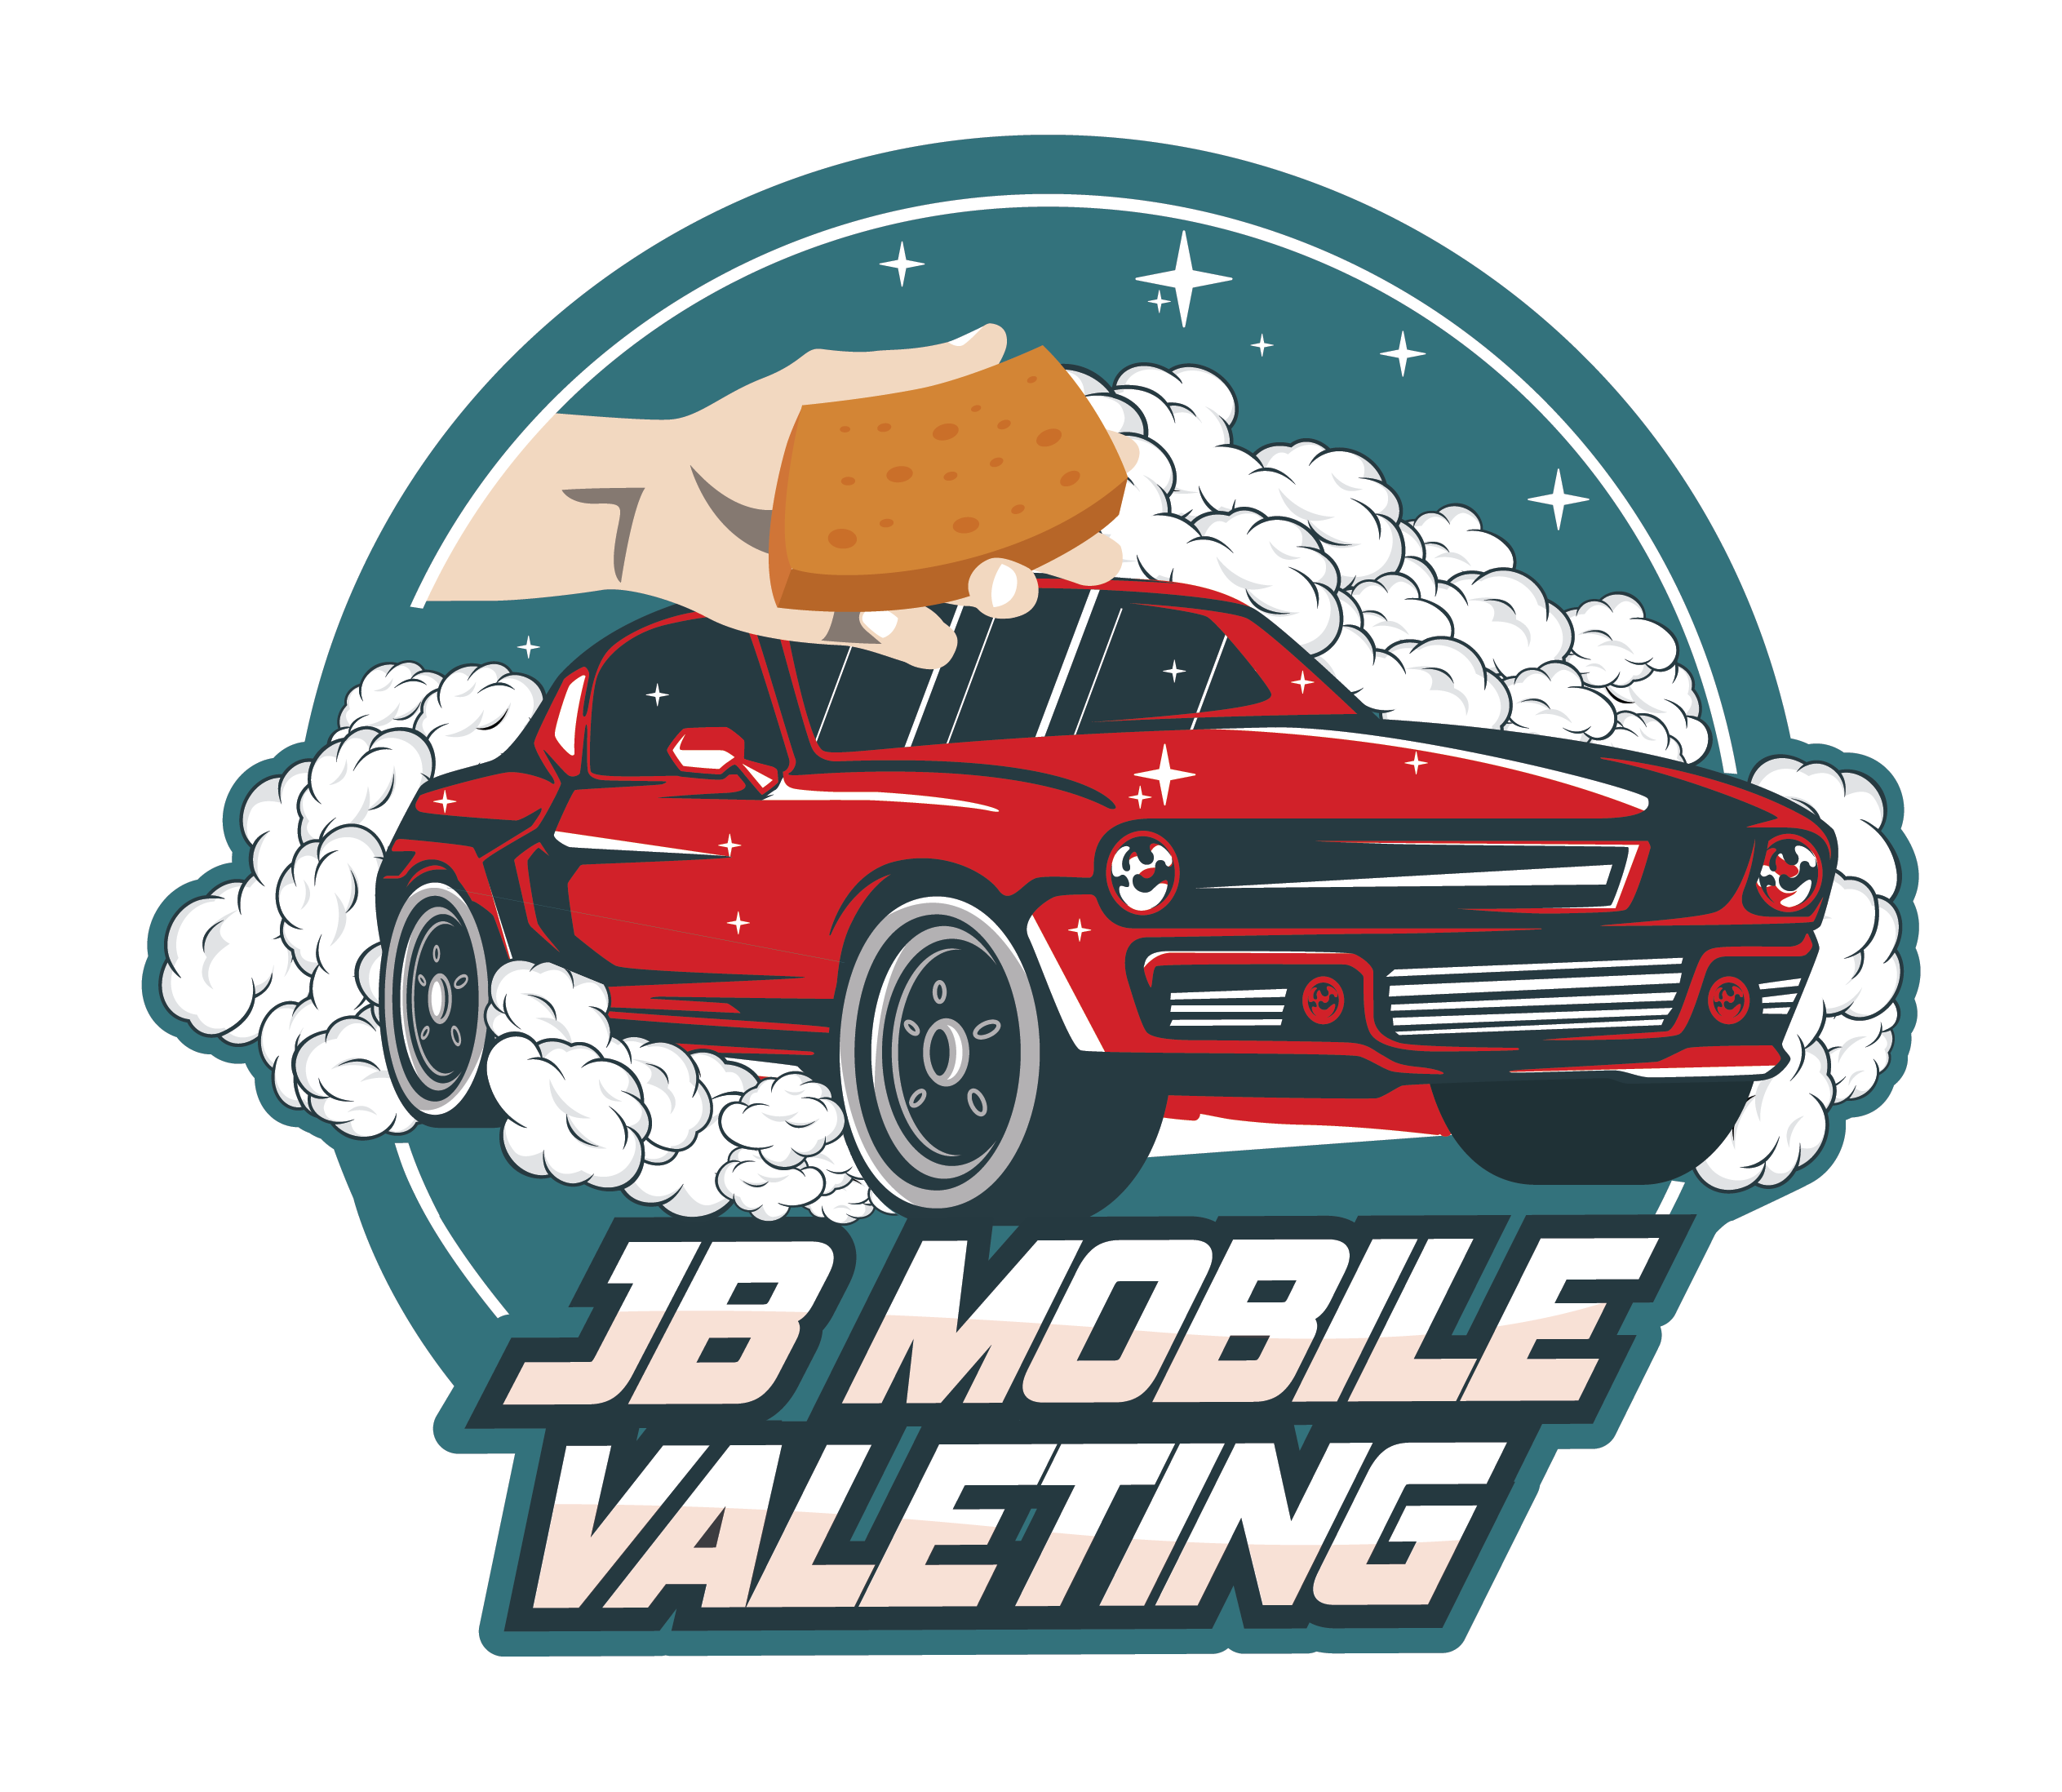 Jb Mobile Valeting